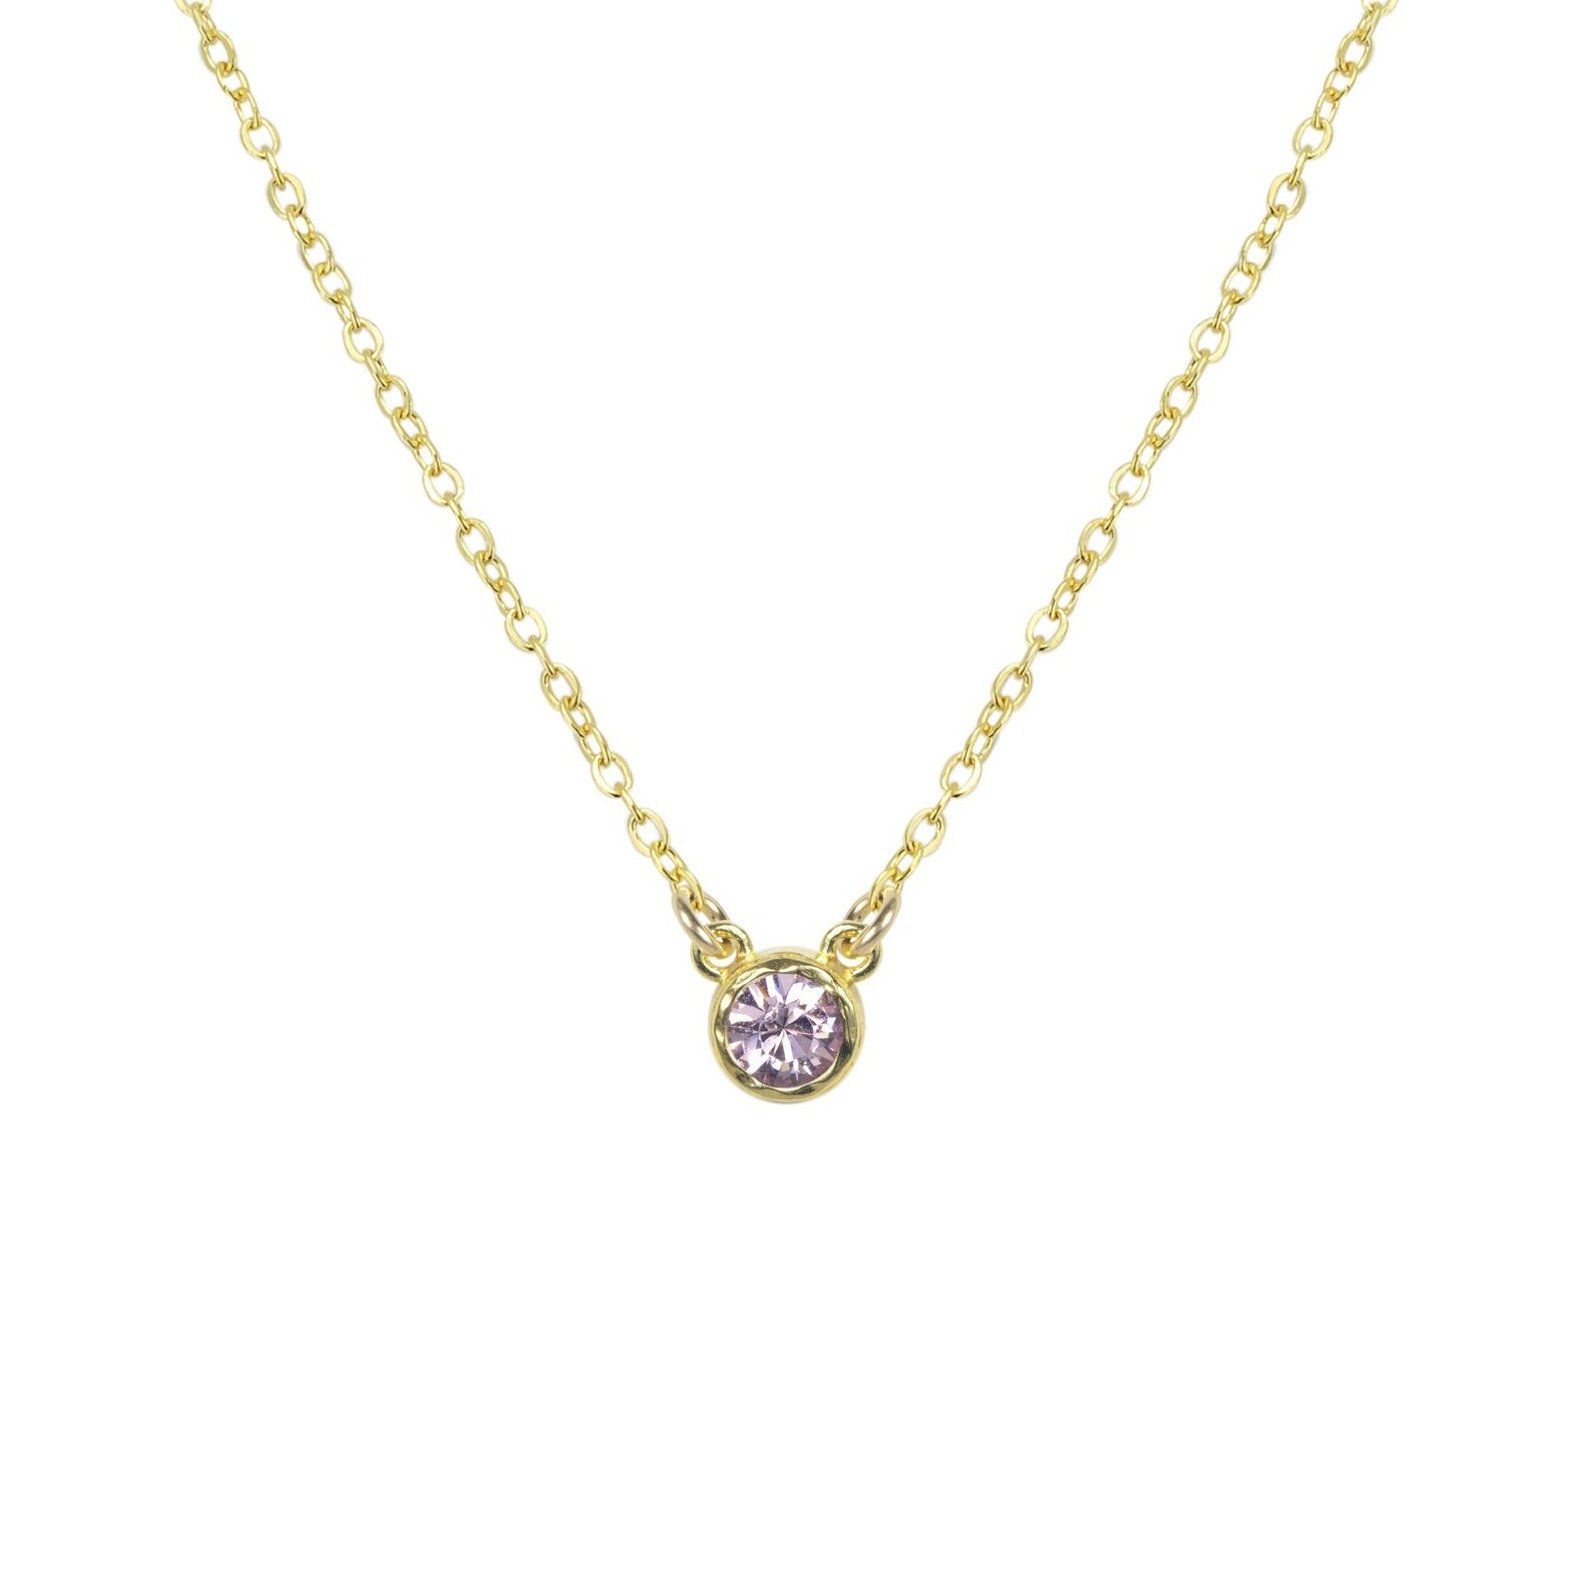 June Birthstone Necklace by Katie Dean Jewelry, Swarovski Crystal in light amethyst lavender purple